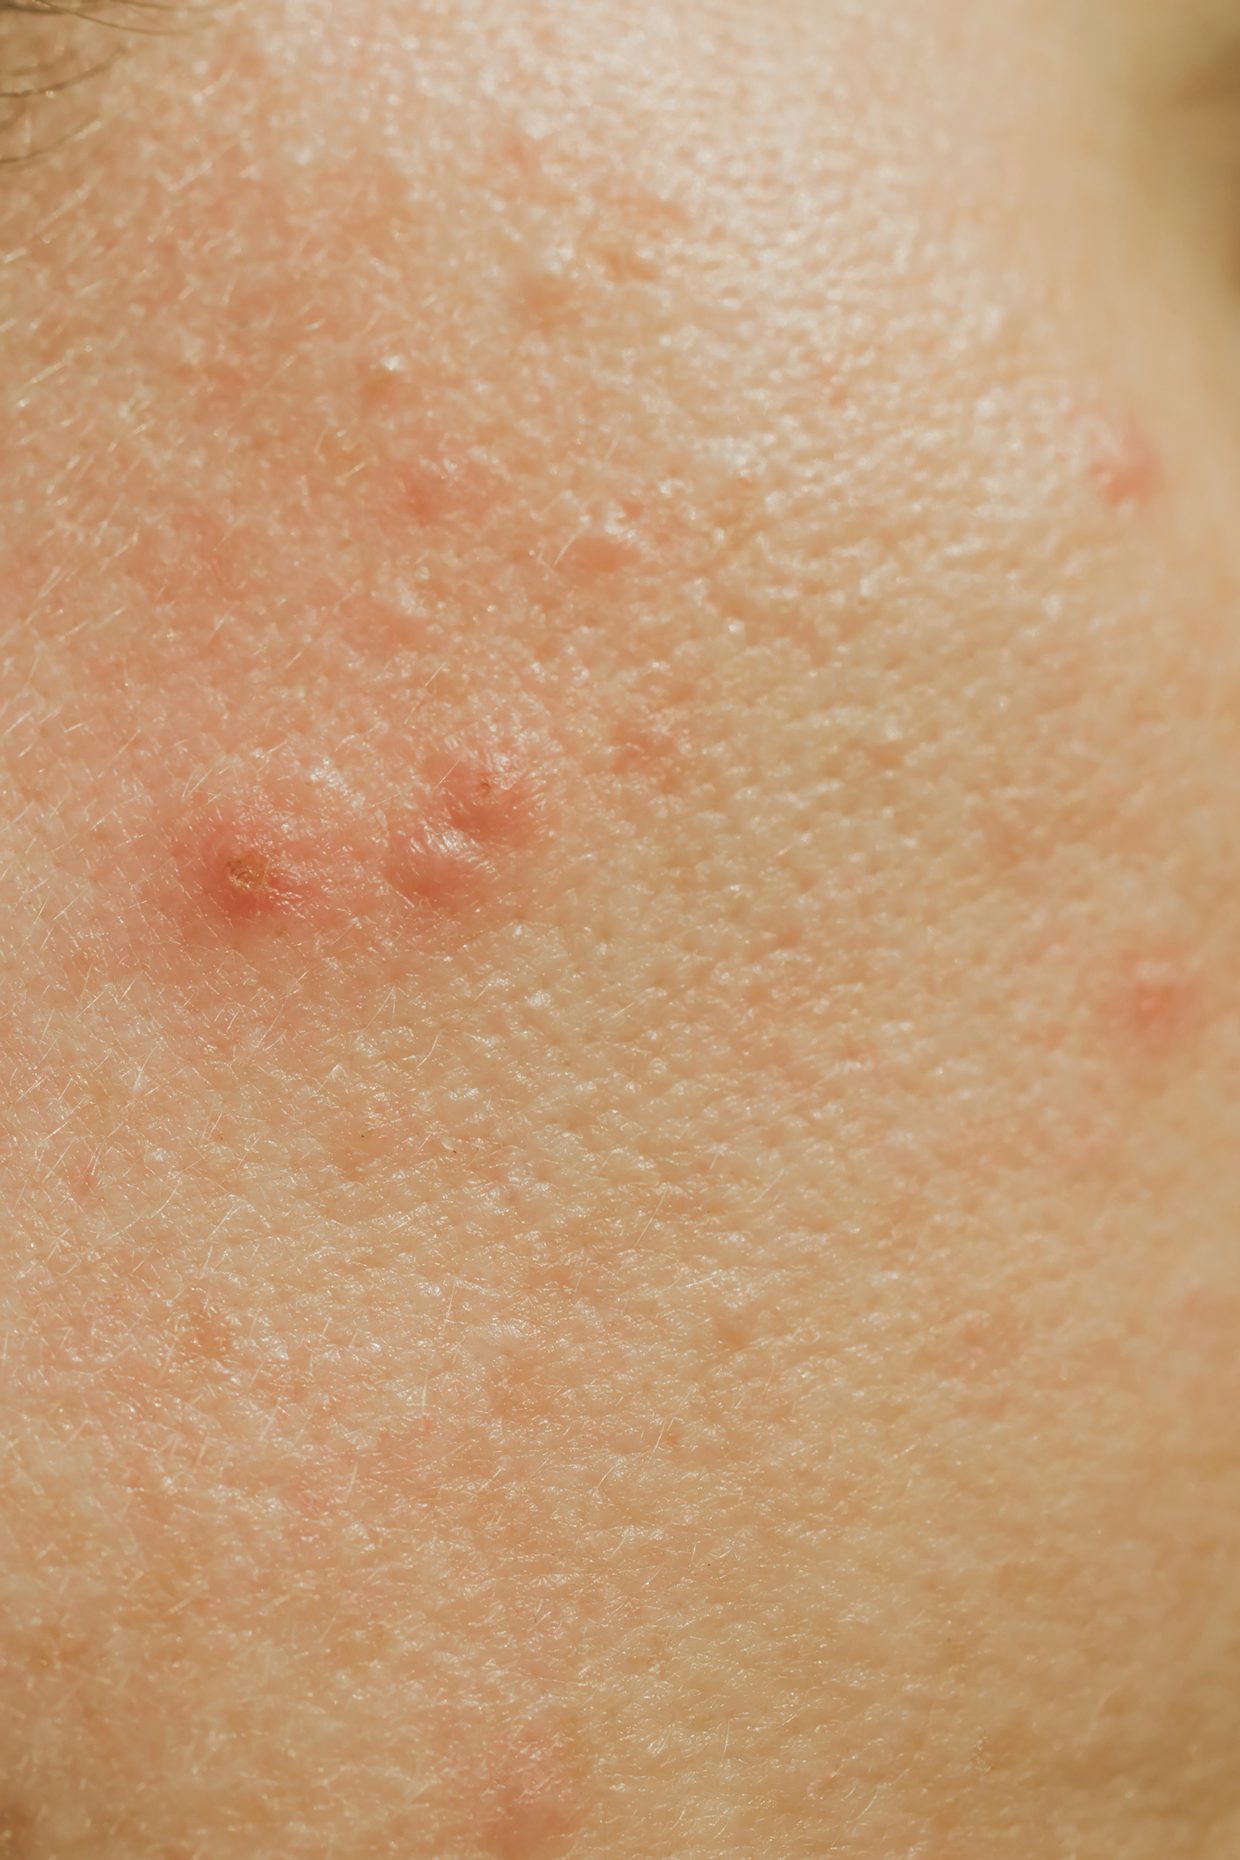 close up of acne